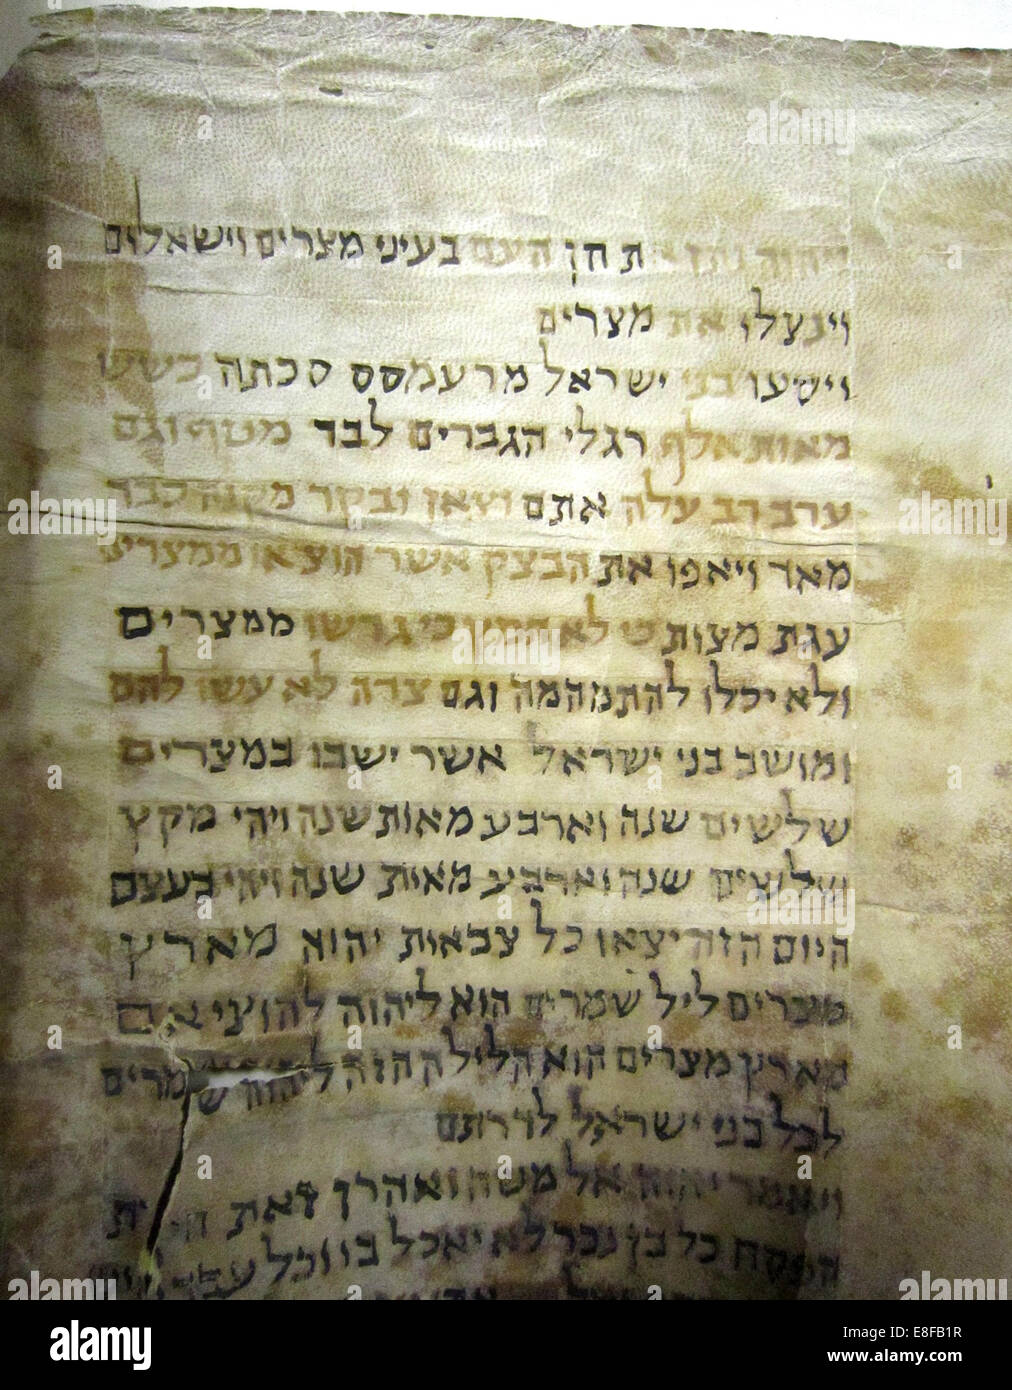 Torah scribe hi-res stock photography and images - Alamy